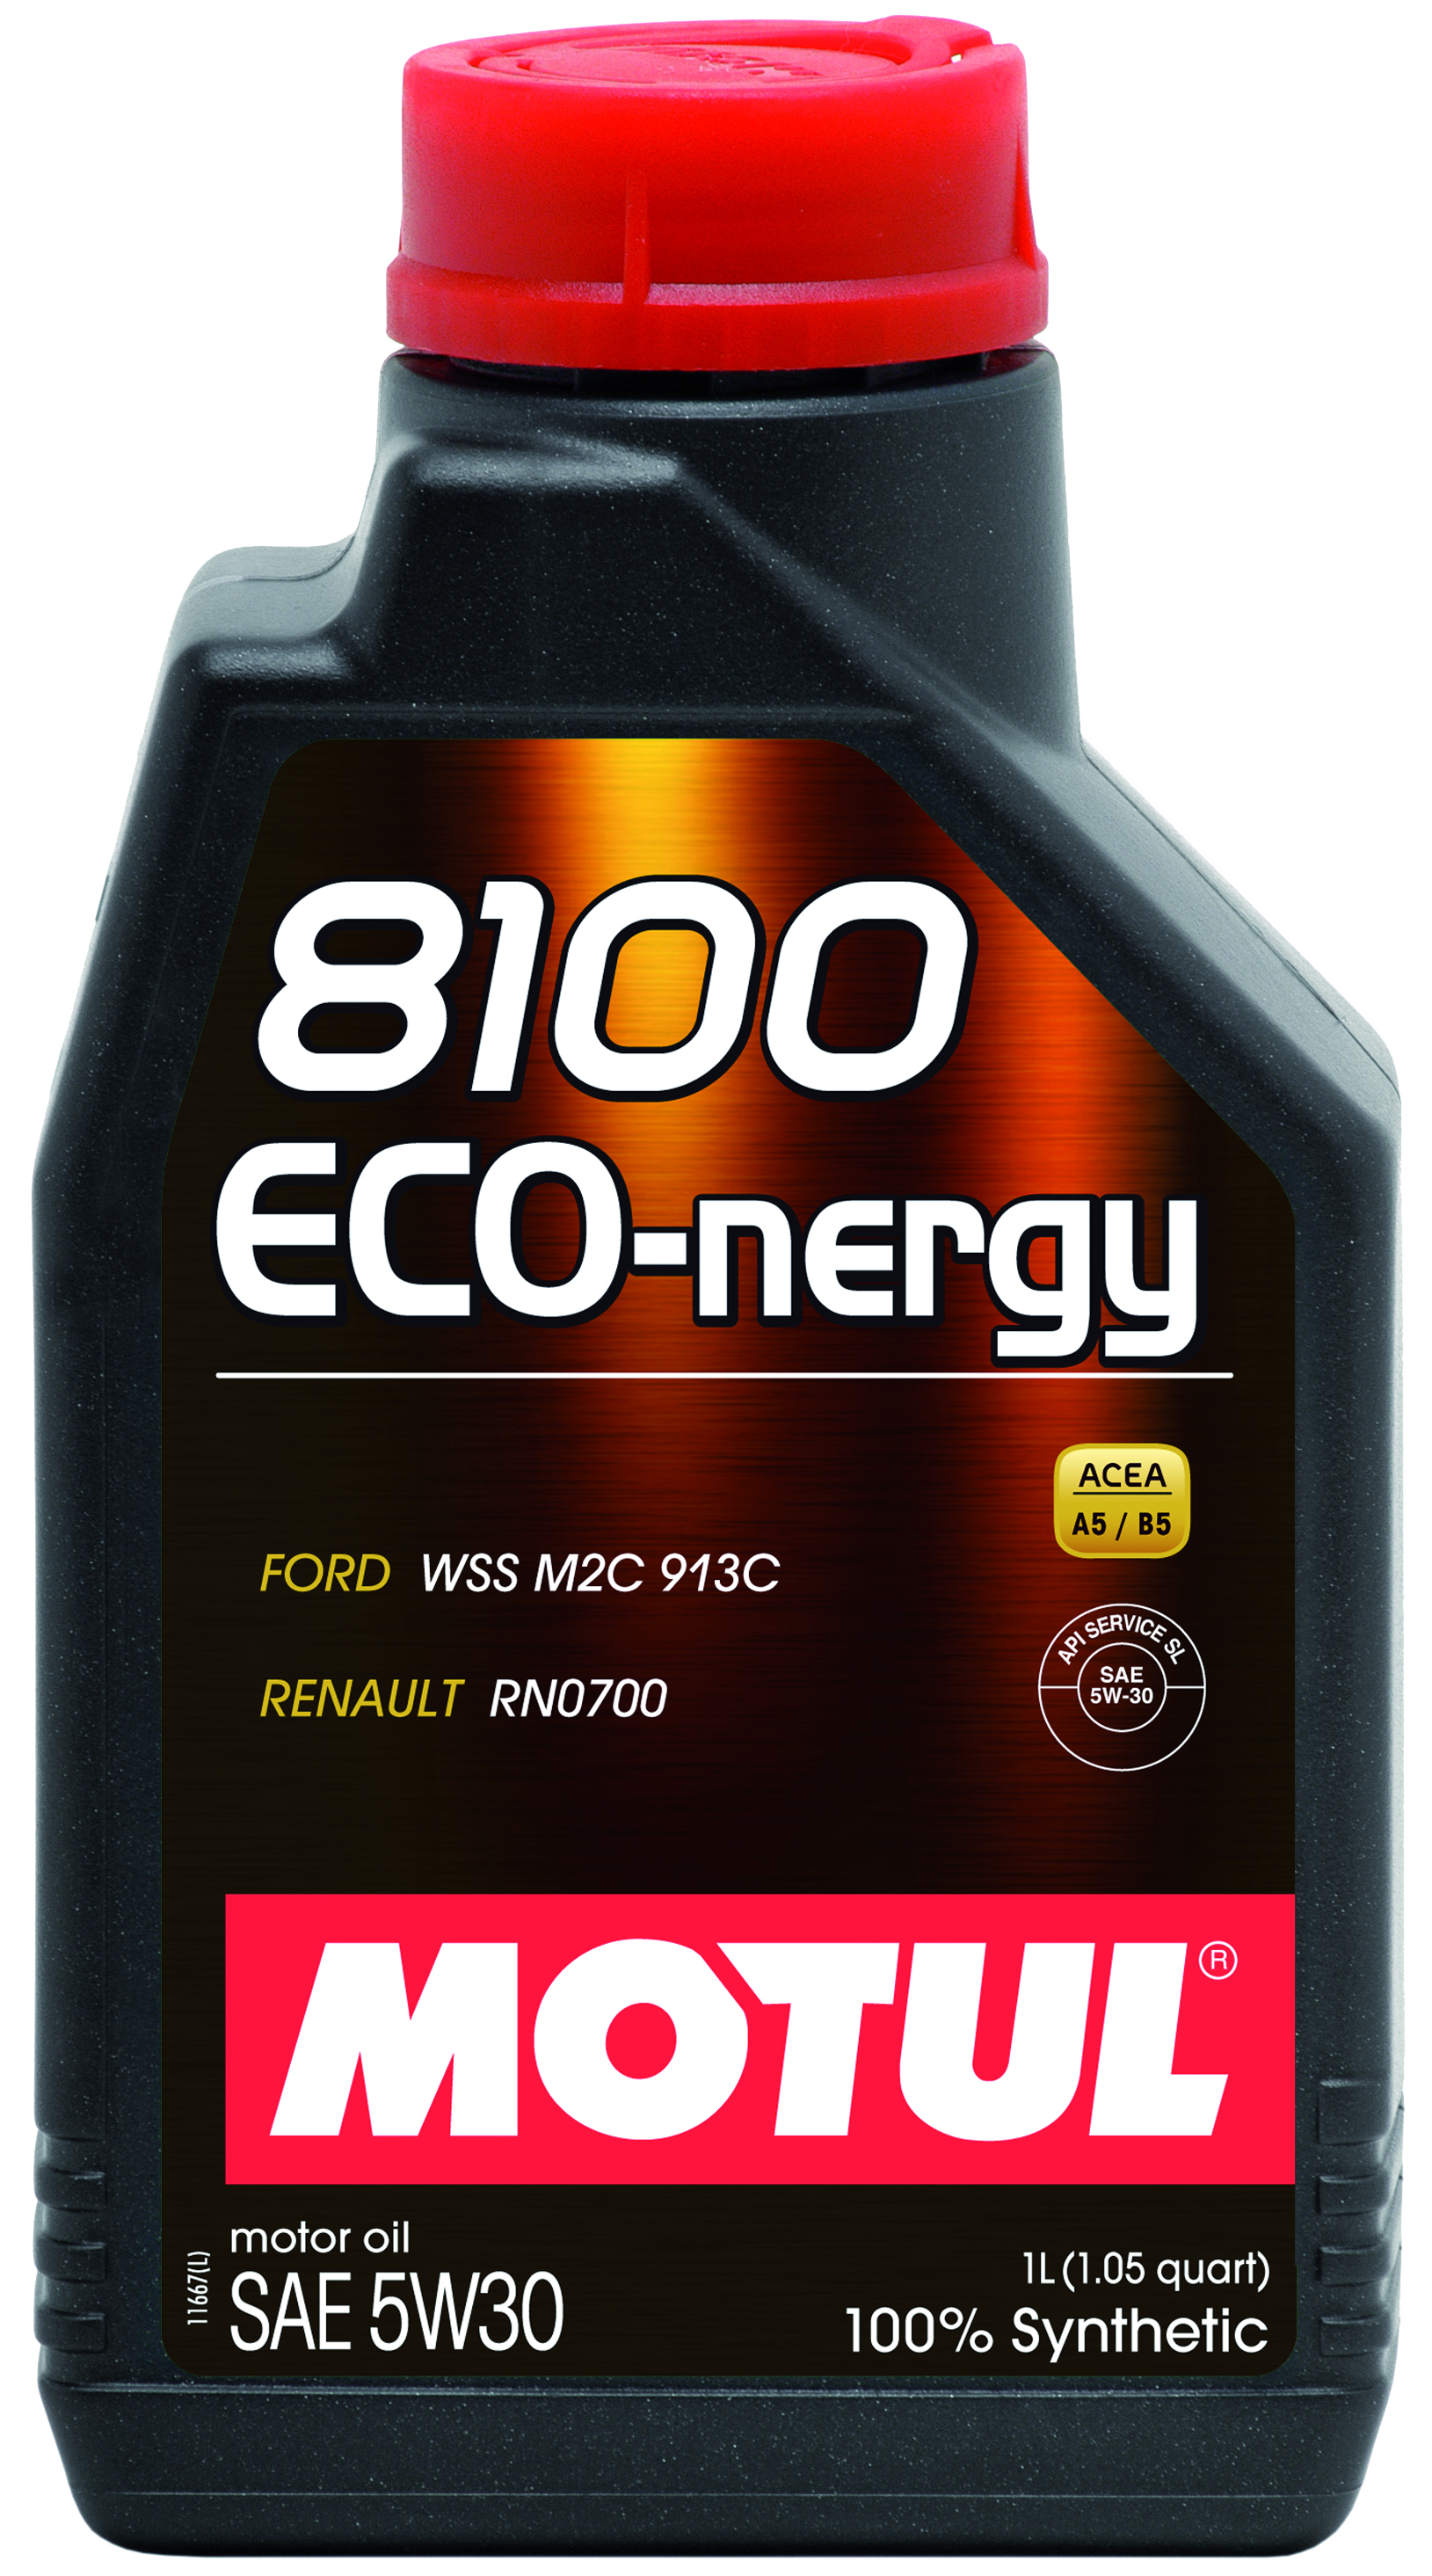 MOTUL 8100 ECO-NERGY 5W30 - 1L - Synthetic Engine Oil